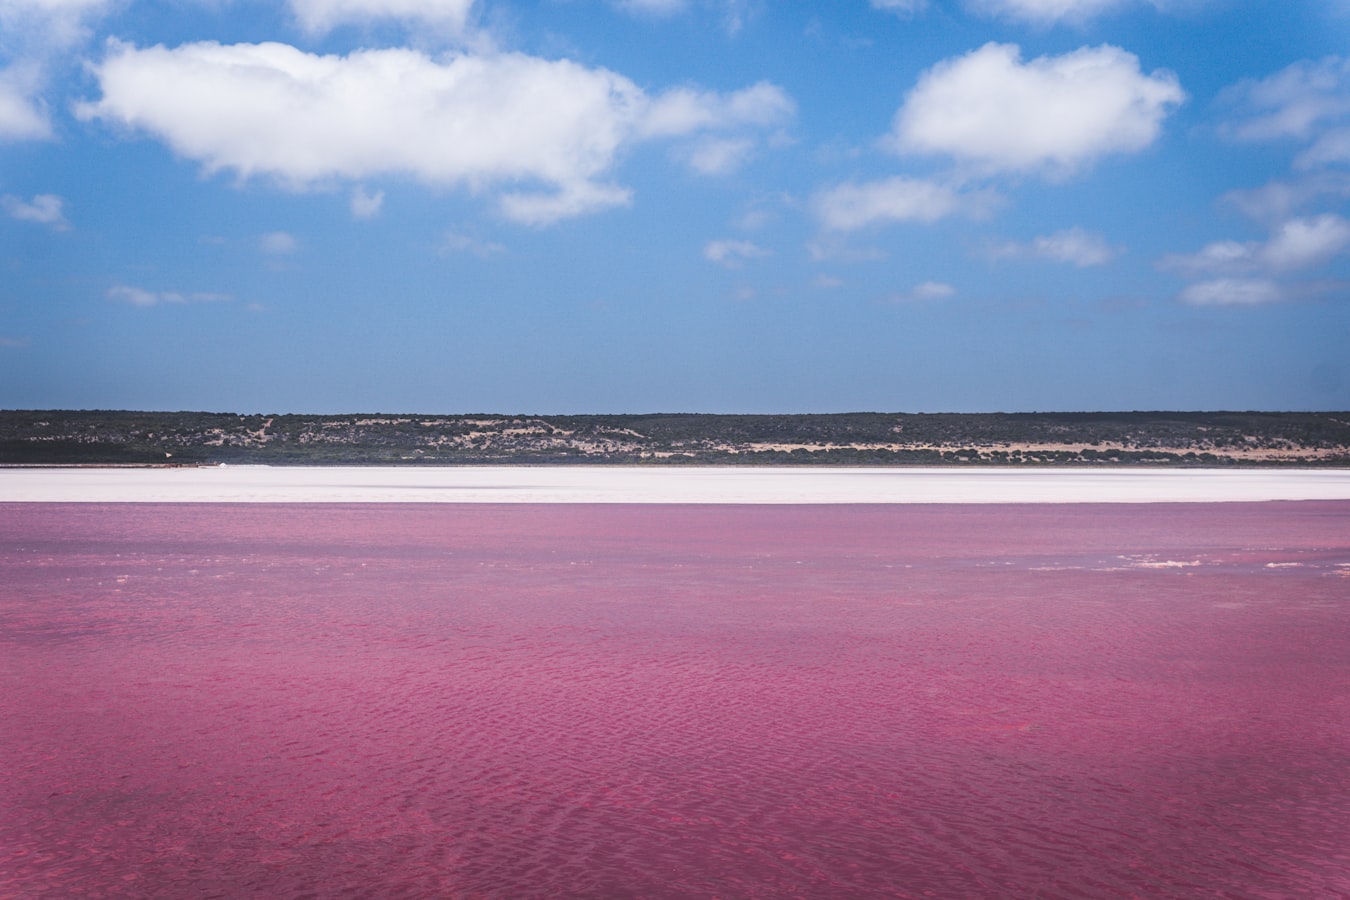 Australia Has More Than One Pink Lake (Many More!)